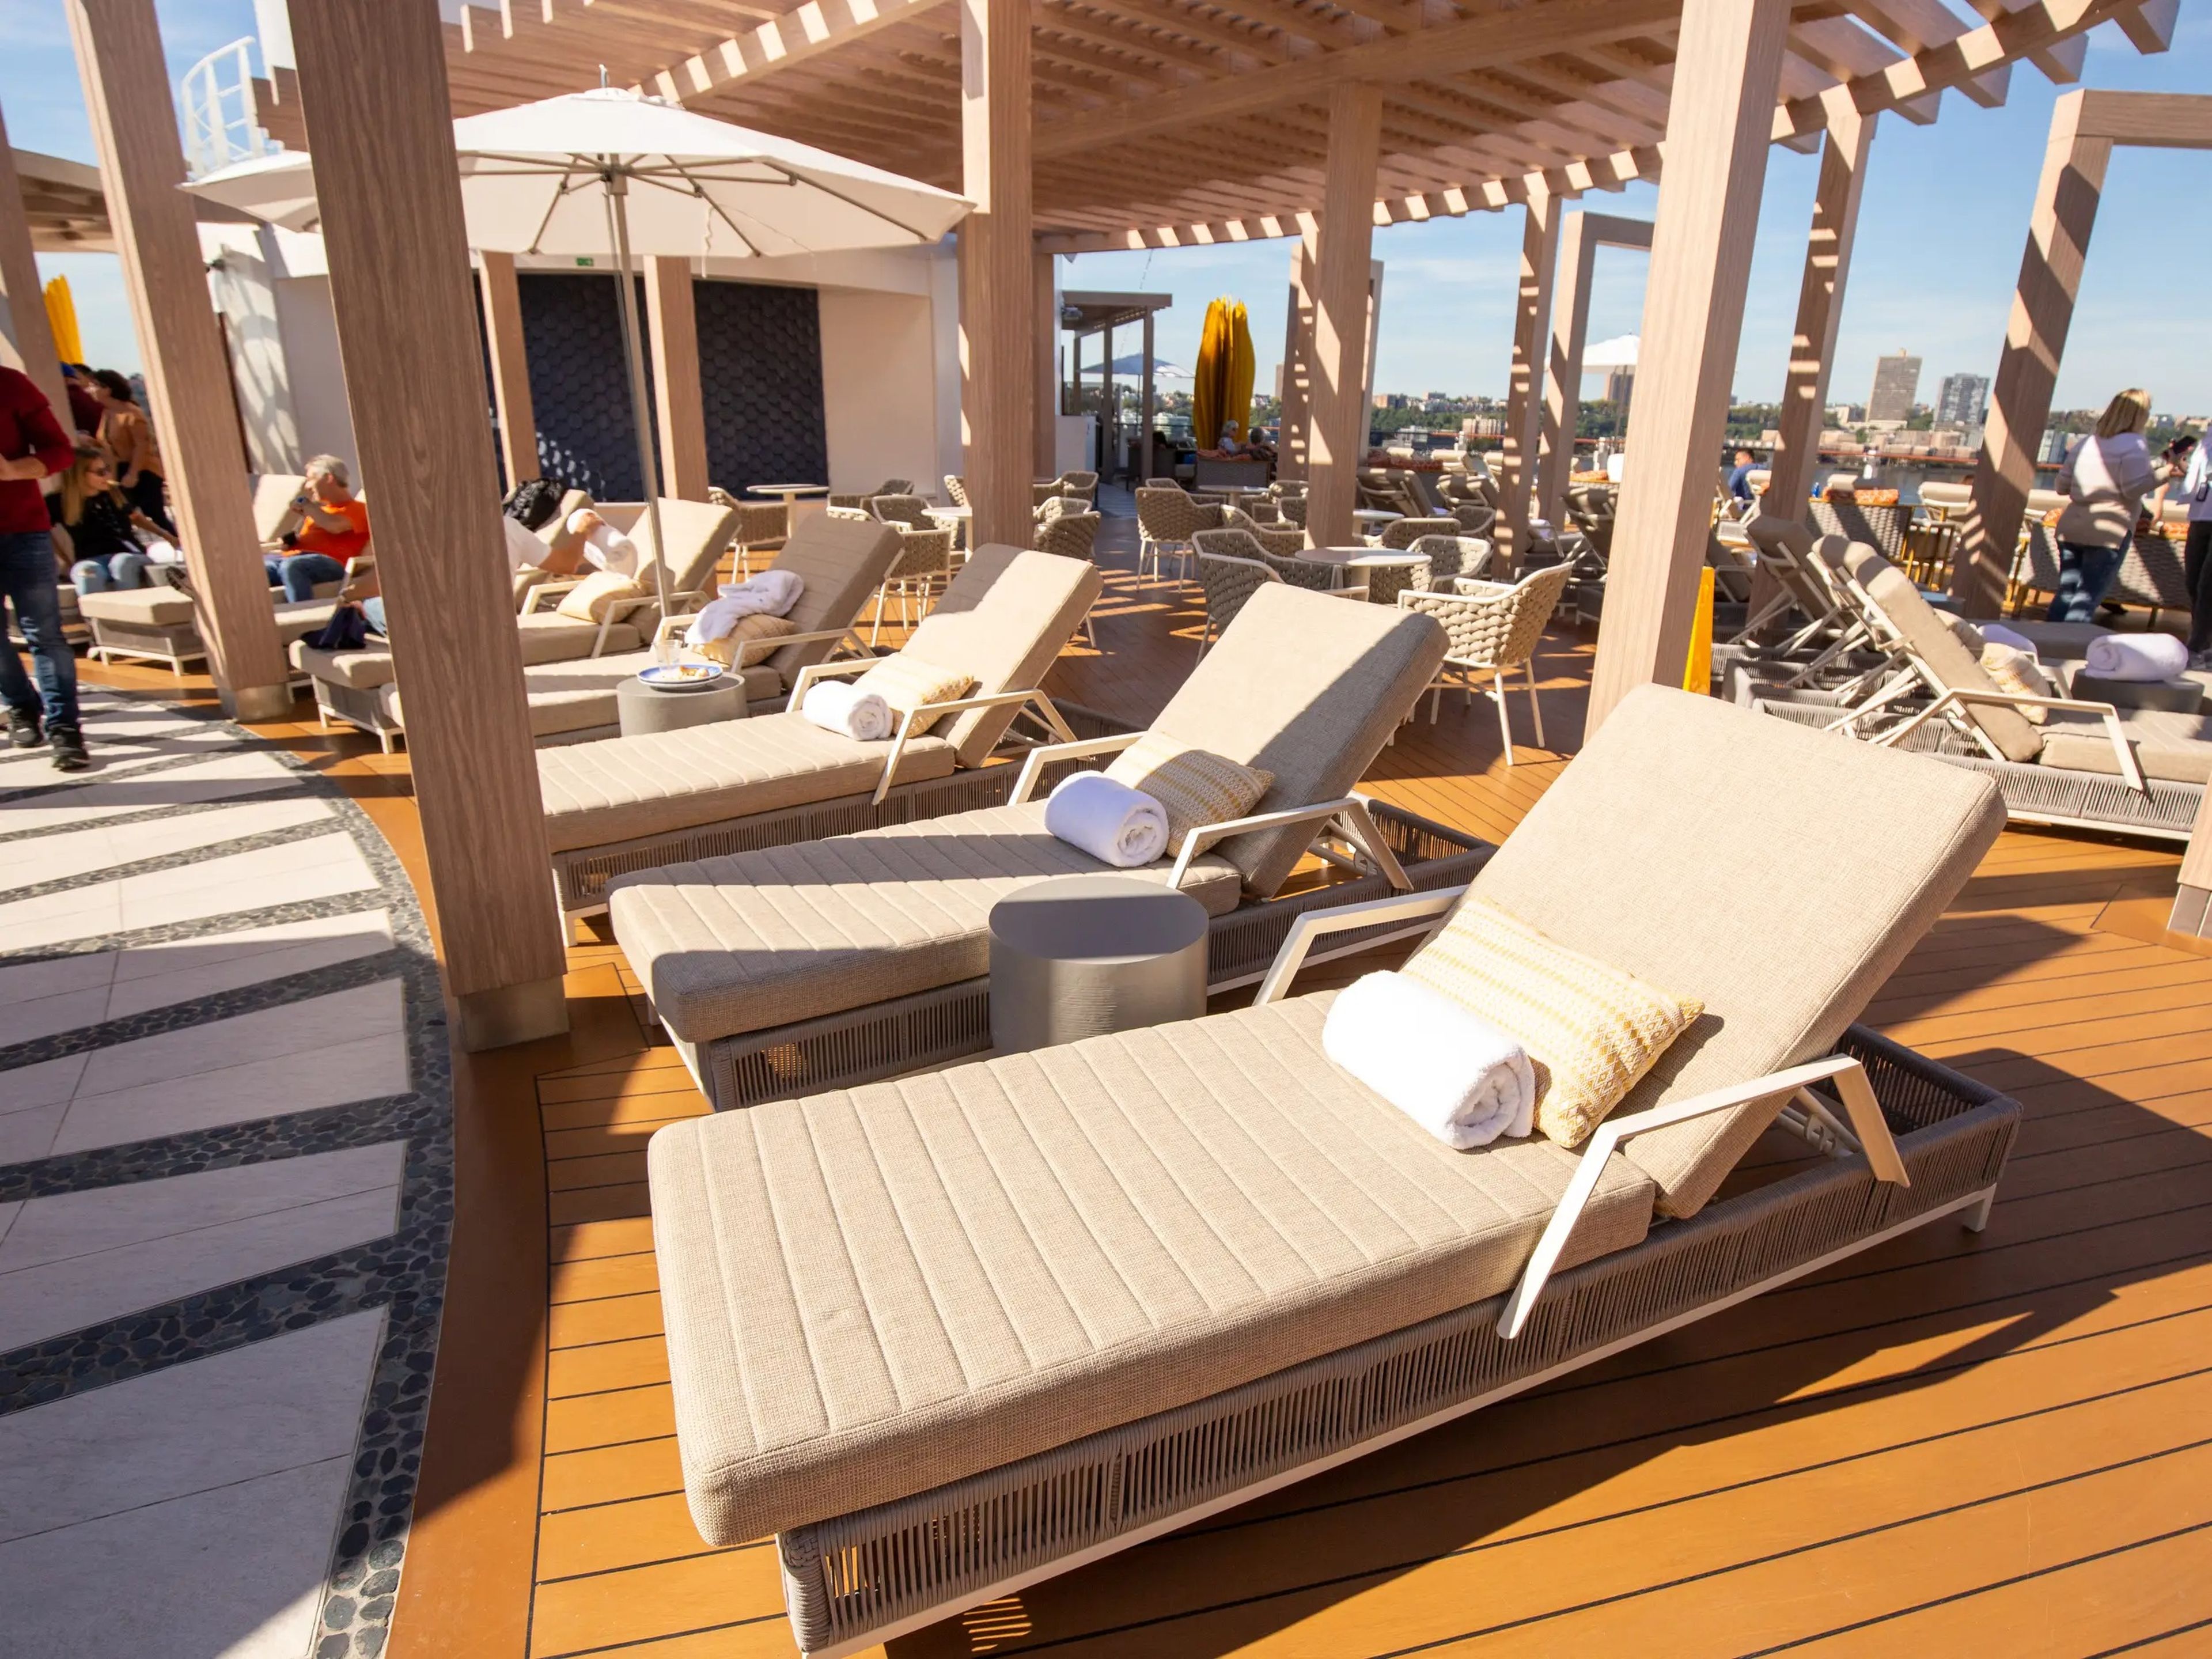 The amenities inside Norwegian Cruise Line's Norwegian Prima cruise ship.The amenities inside Norwegian Cruise Line's Norwegian Prima cruise ship.